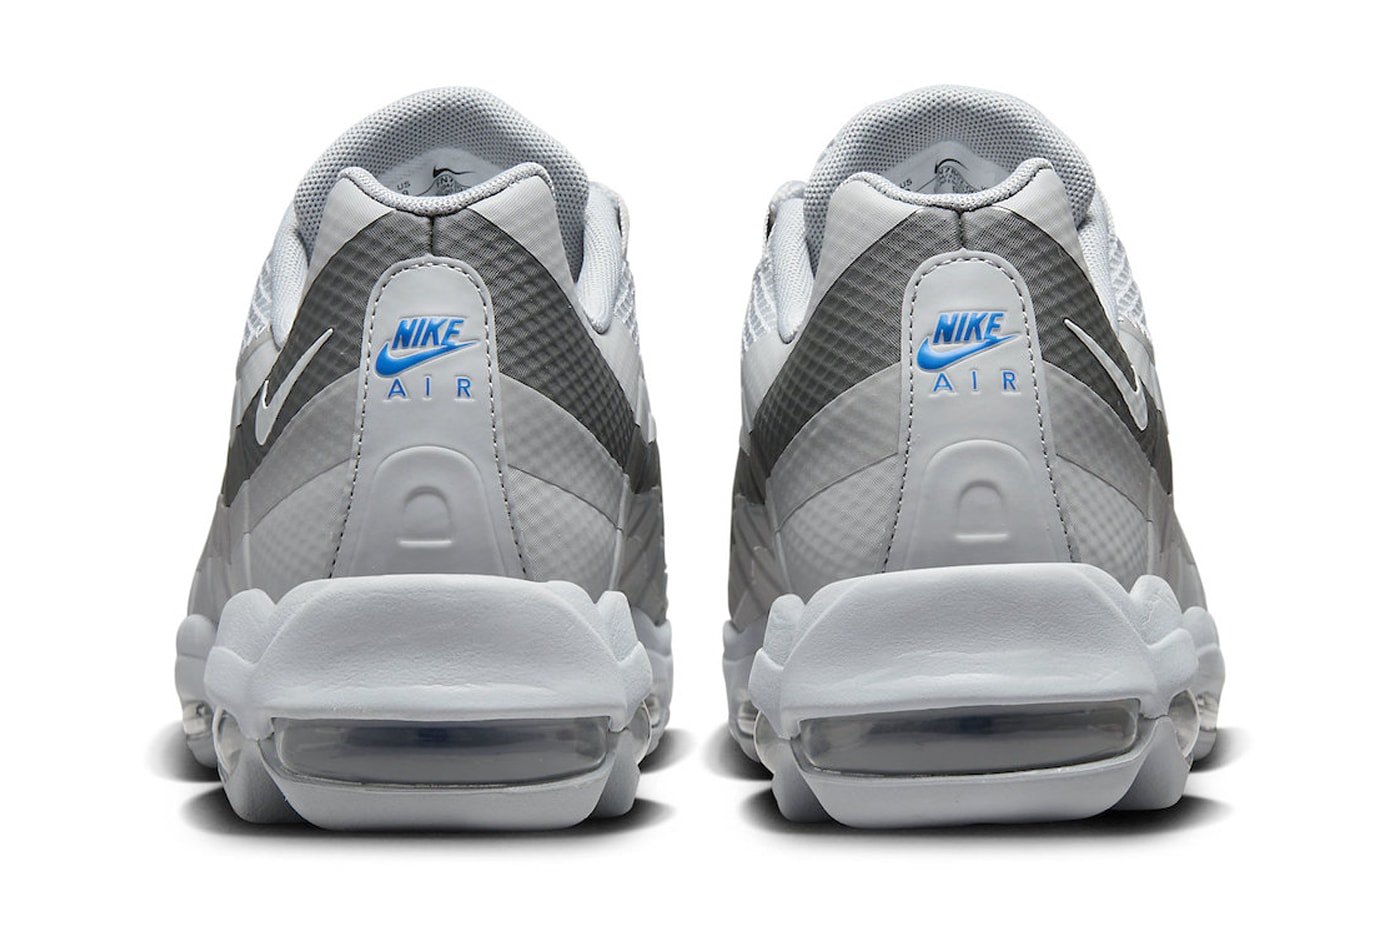 Nike Air Max 95 Ultra Surfaces in Shades of Grey